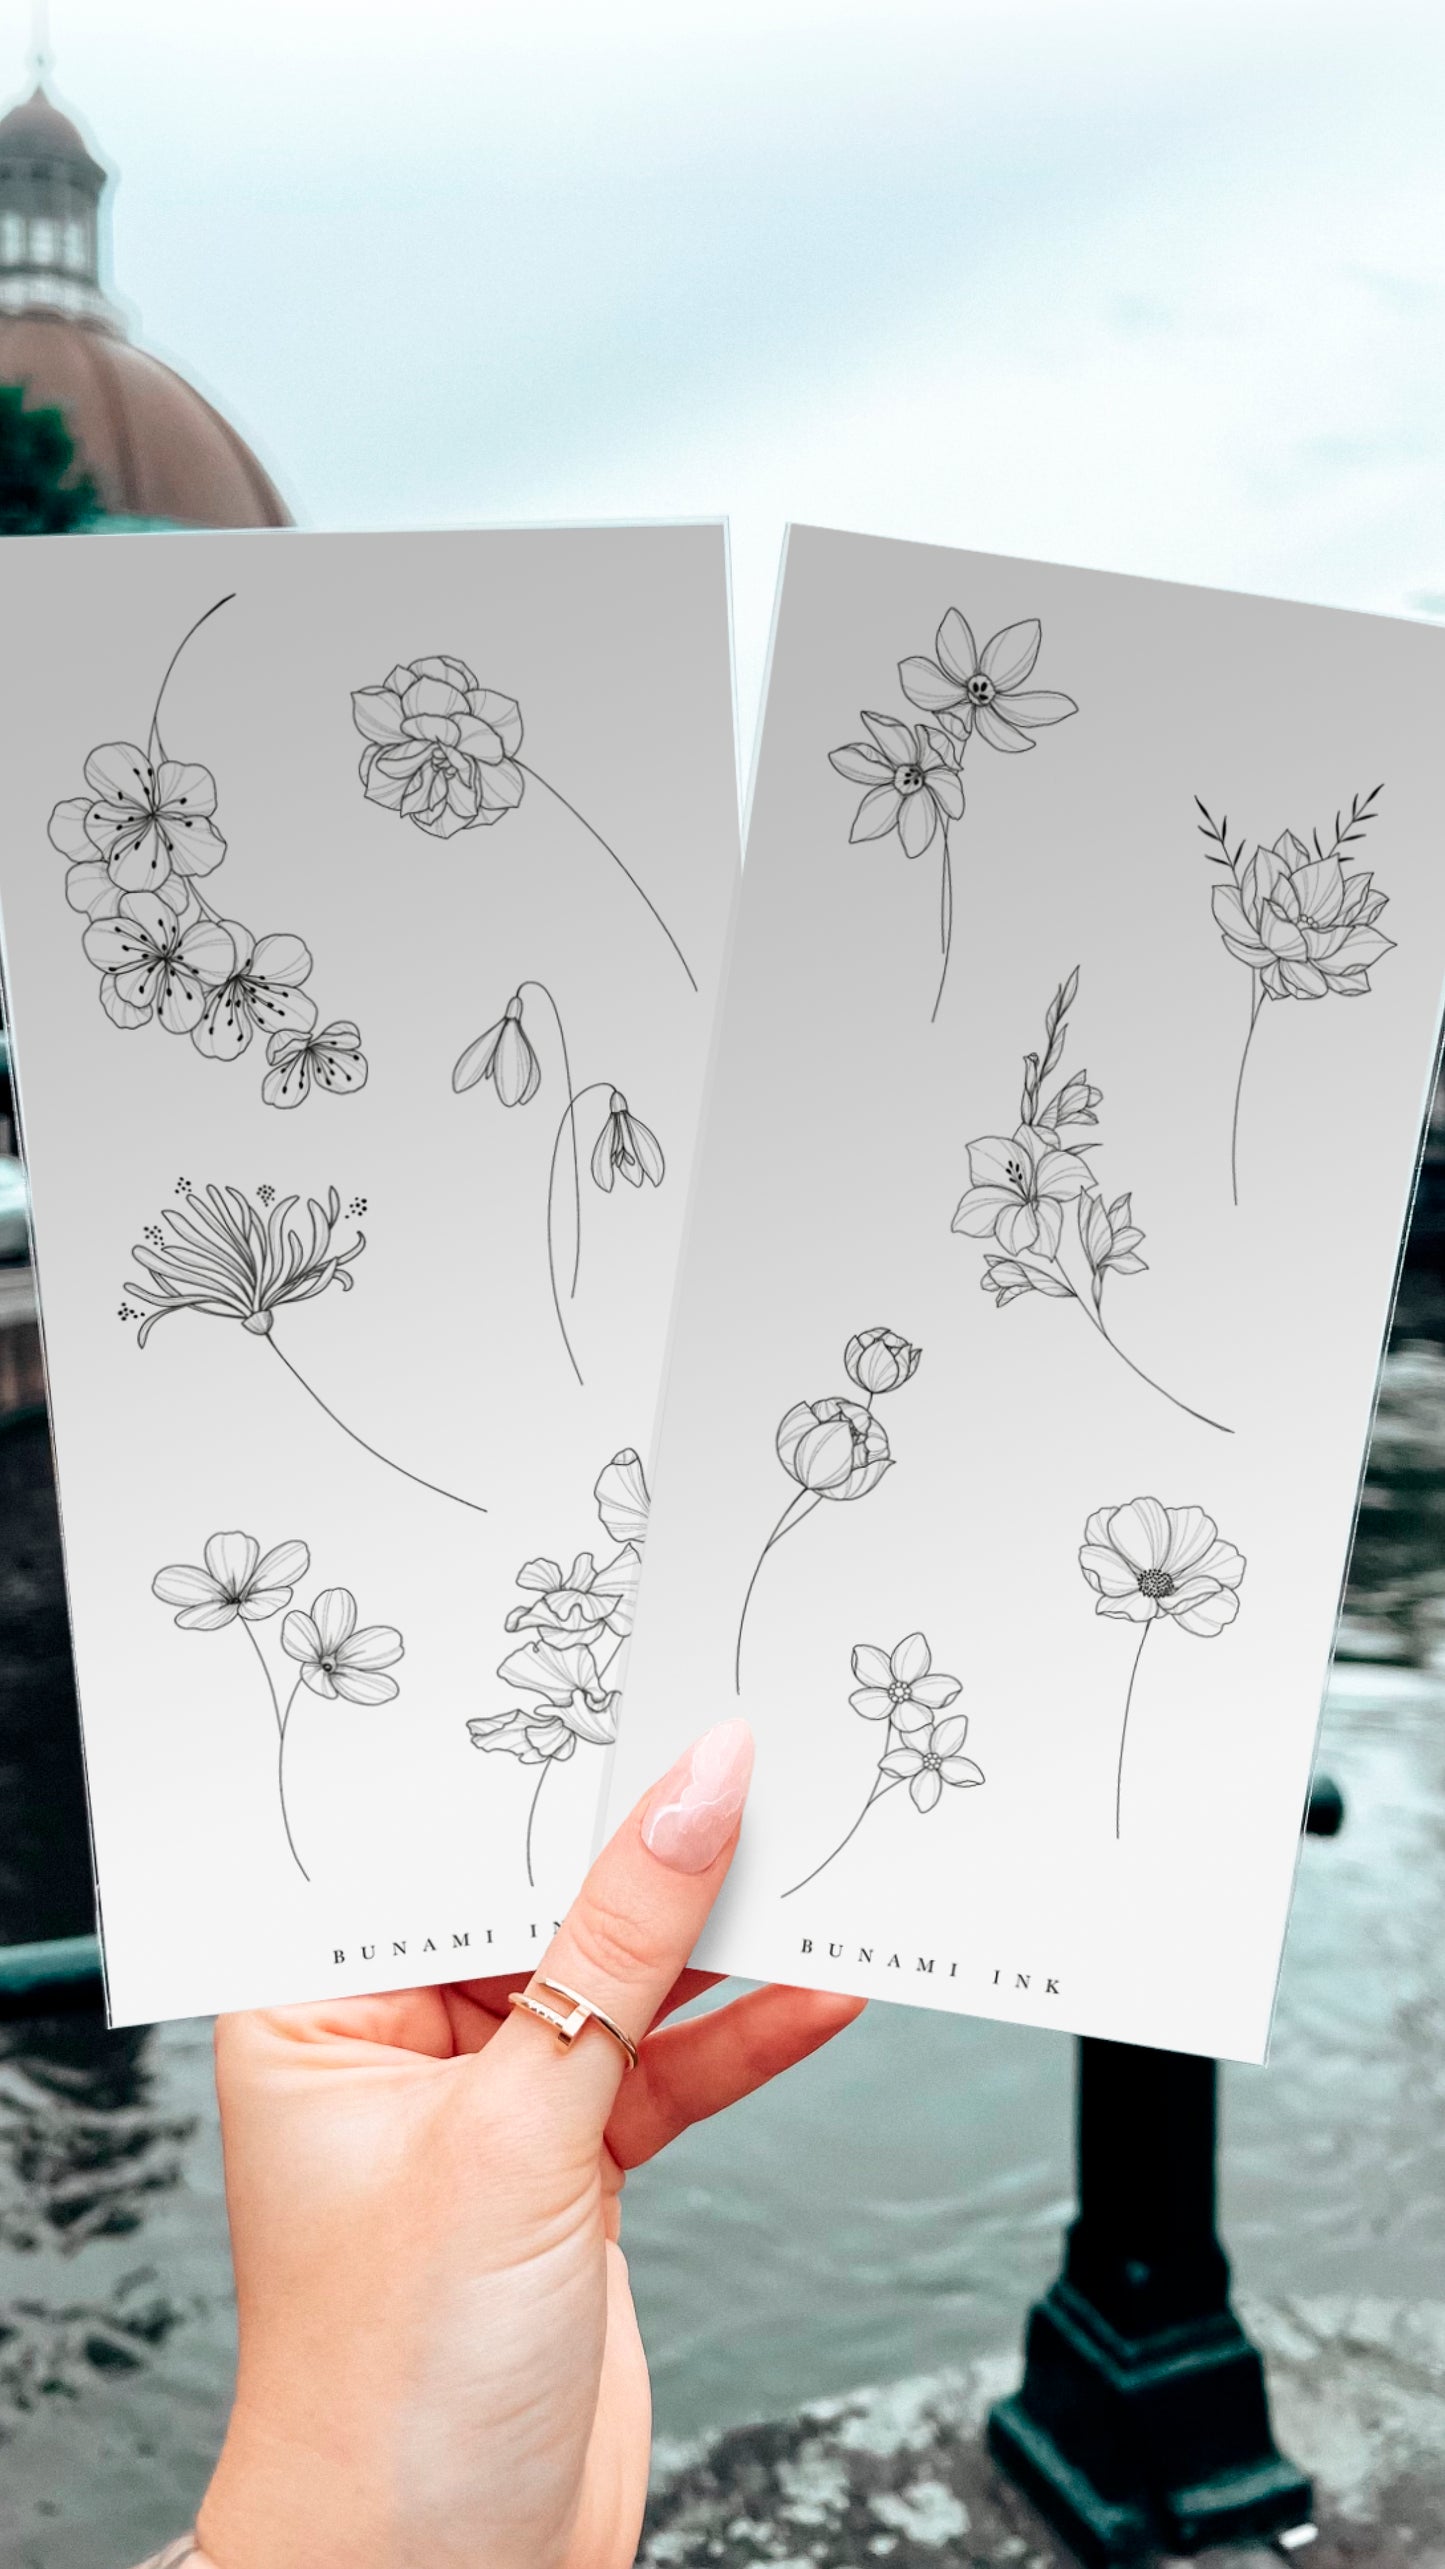 New edition birthflowers full year set (2×), temporary tattoos